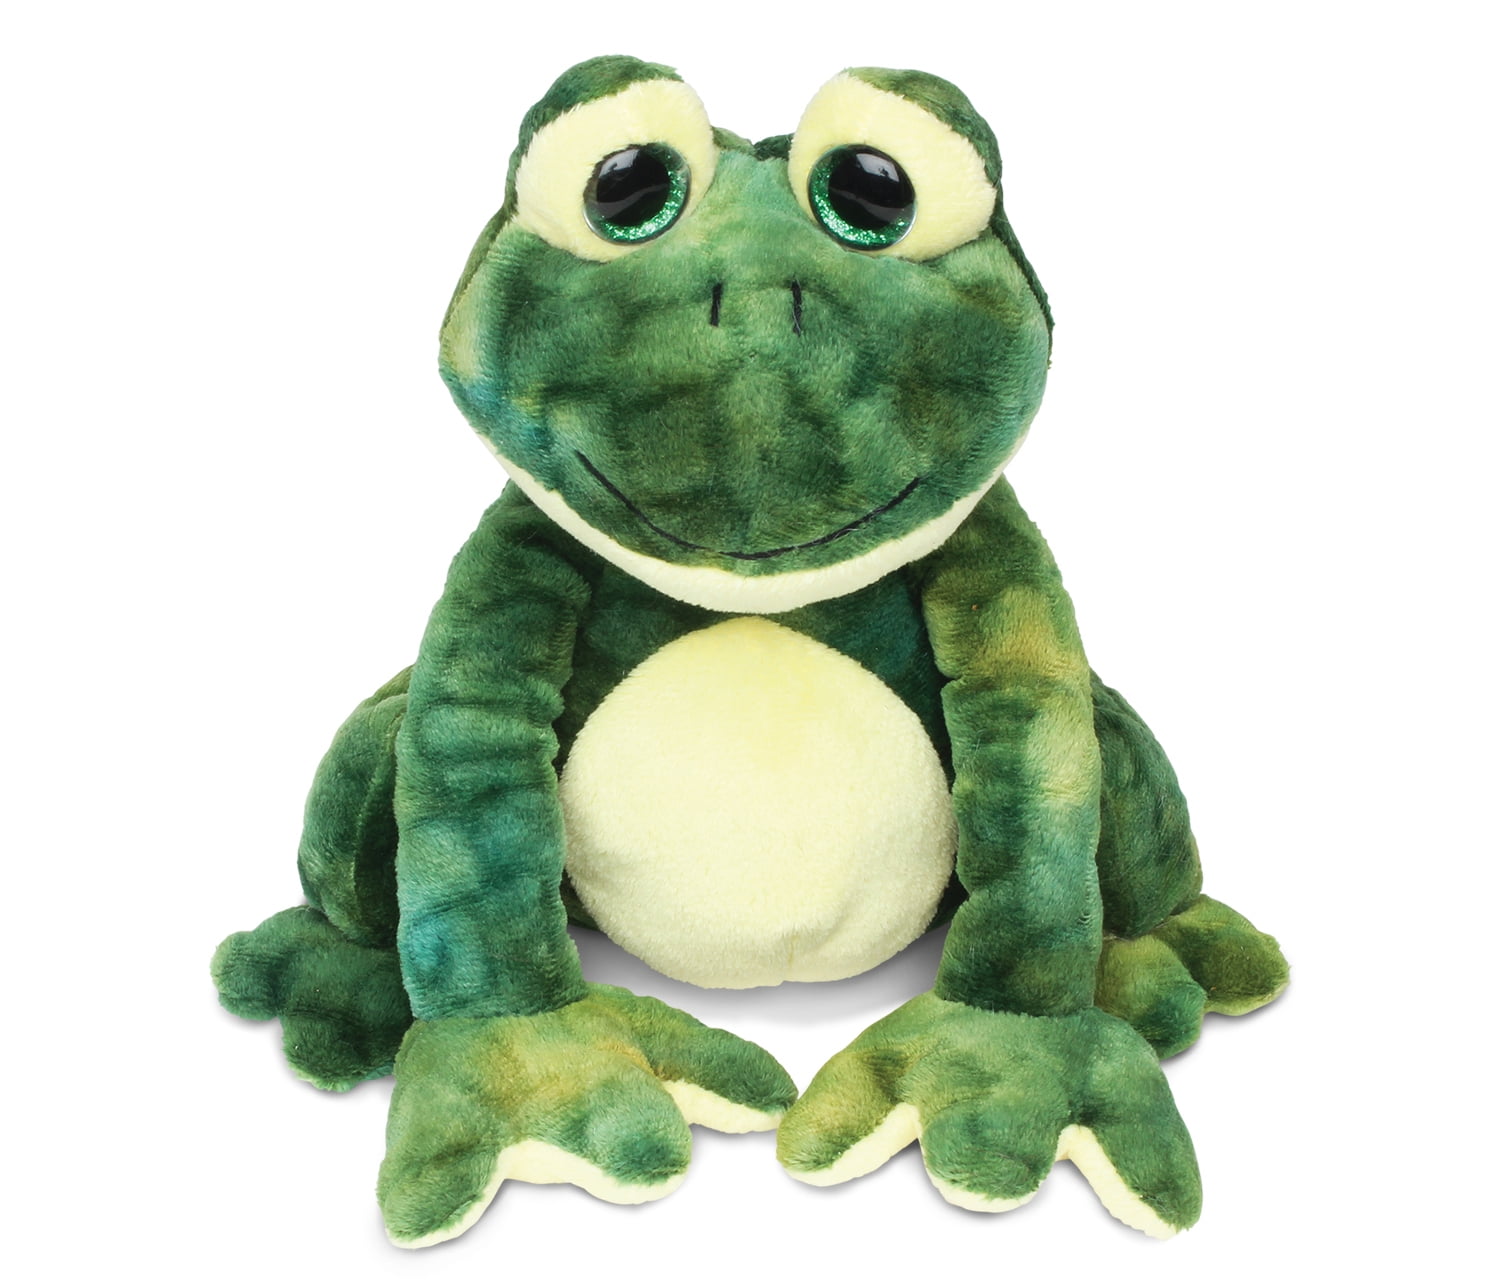 DolliBu Plush Frog Stuffed Animal - Soft Huggable Squat Green